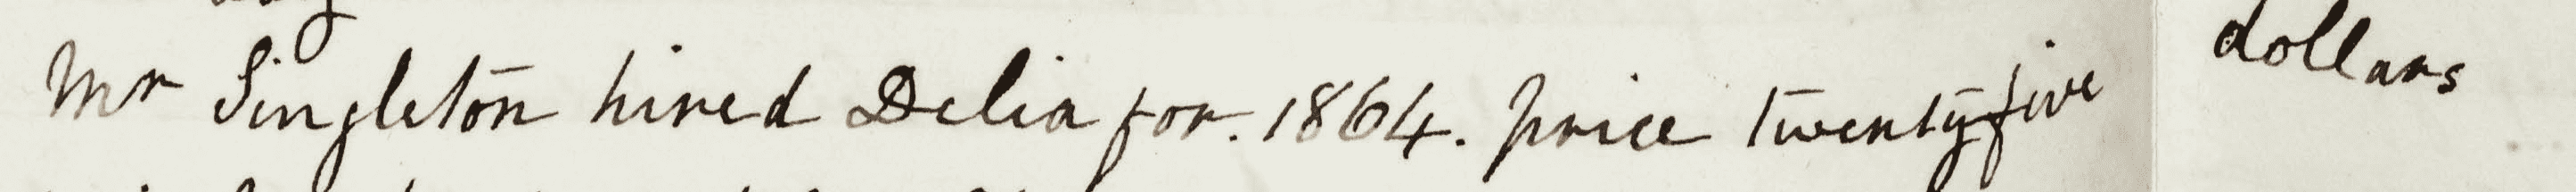 Mr. Singleton hired Delia for 1864. price twenty-five dollars 29 December 1863